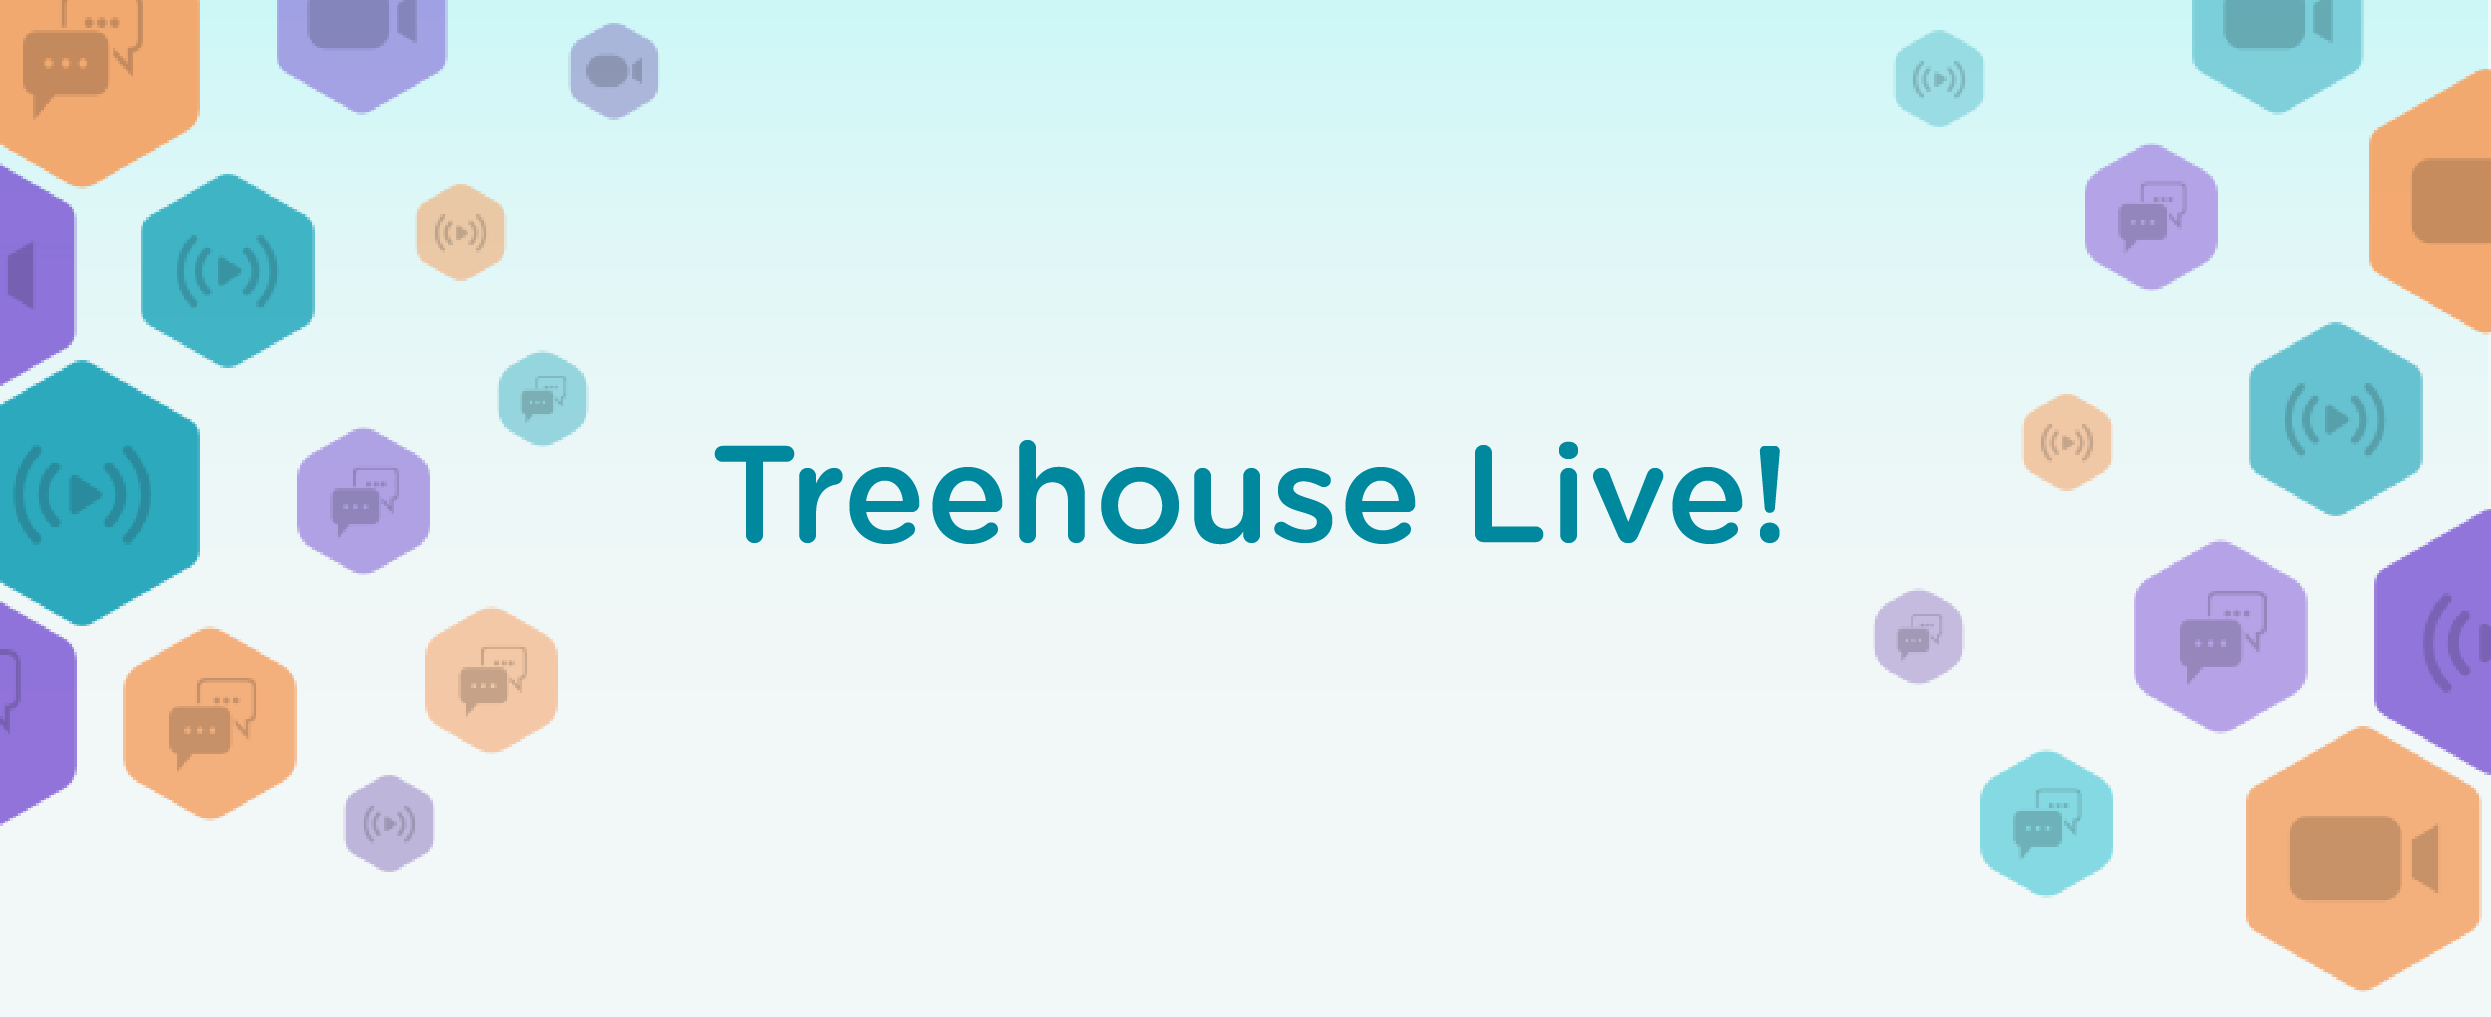 Treehouse Live